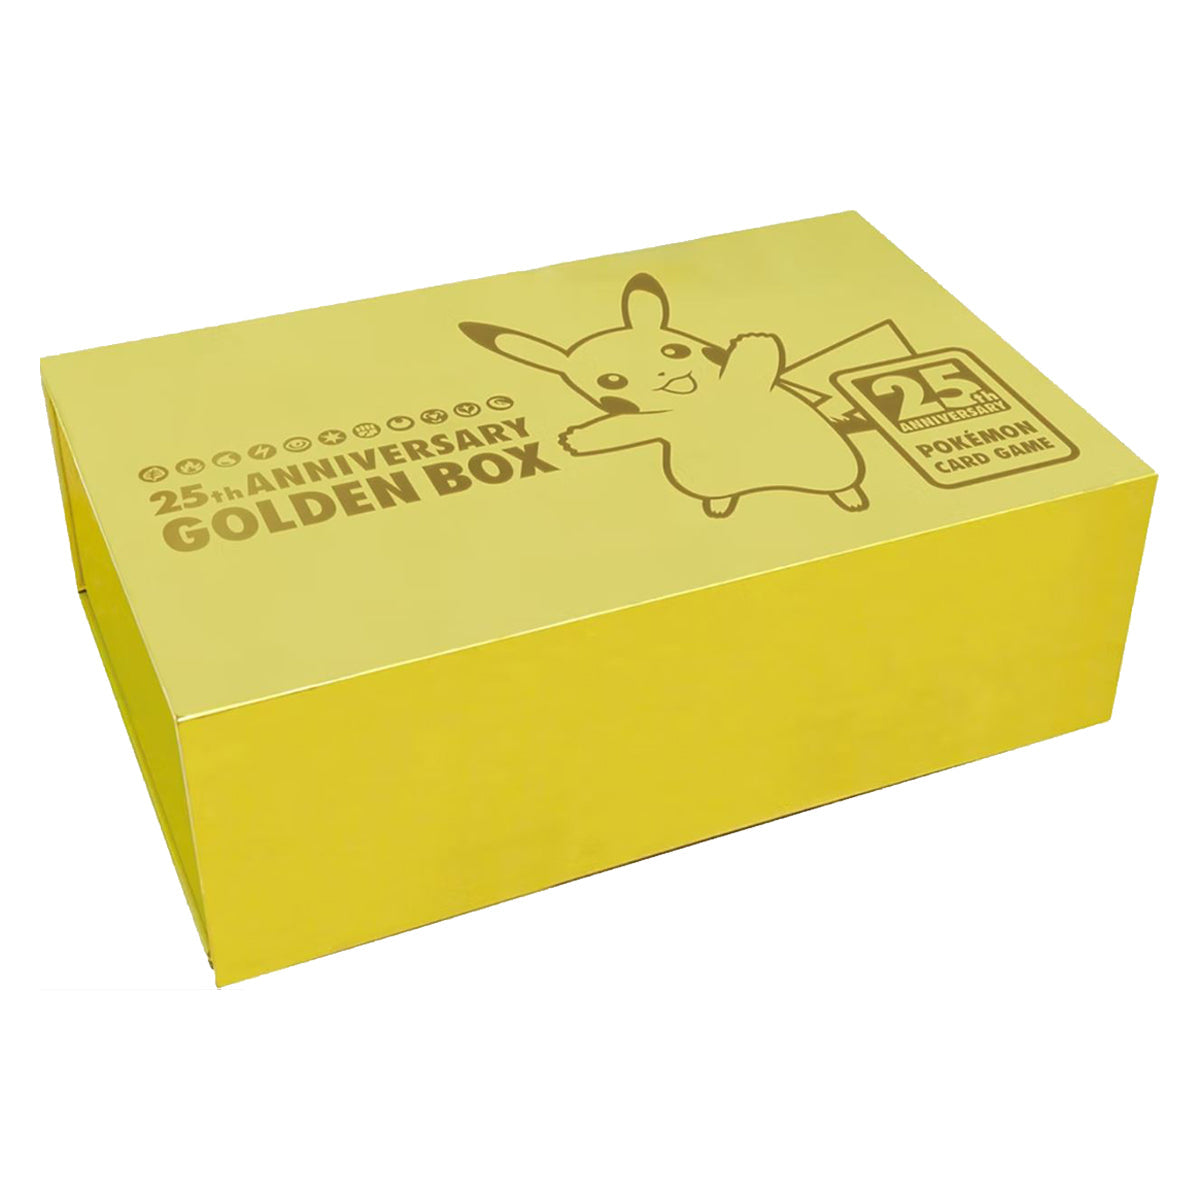 25th ANNIVERSARY GOLDEN BOX(受注生産品)